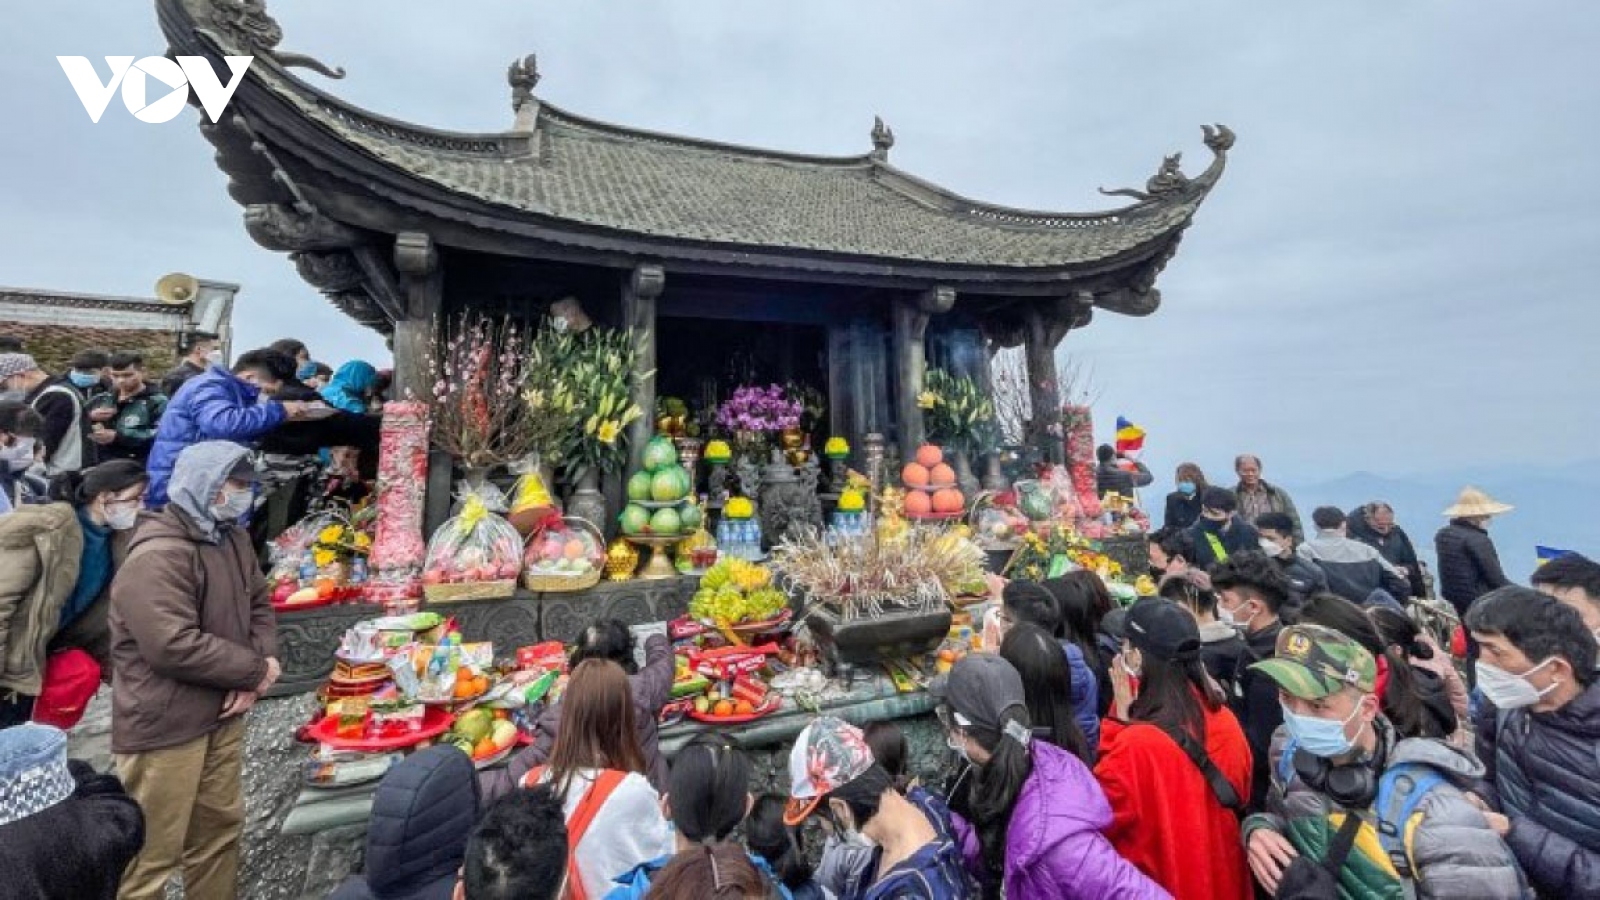 Yen Tu spring festival set to reopen after three-year hiatus